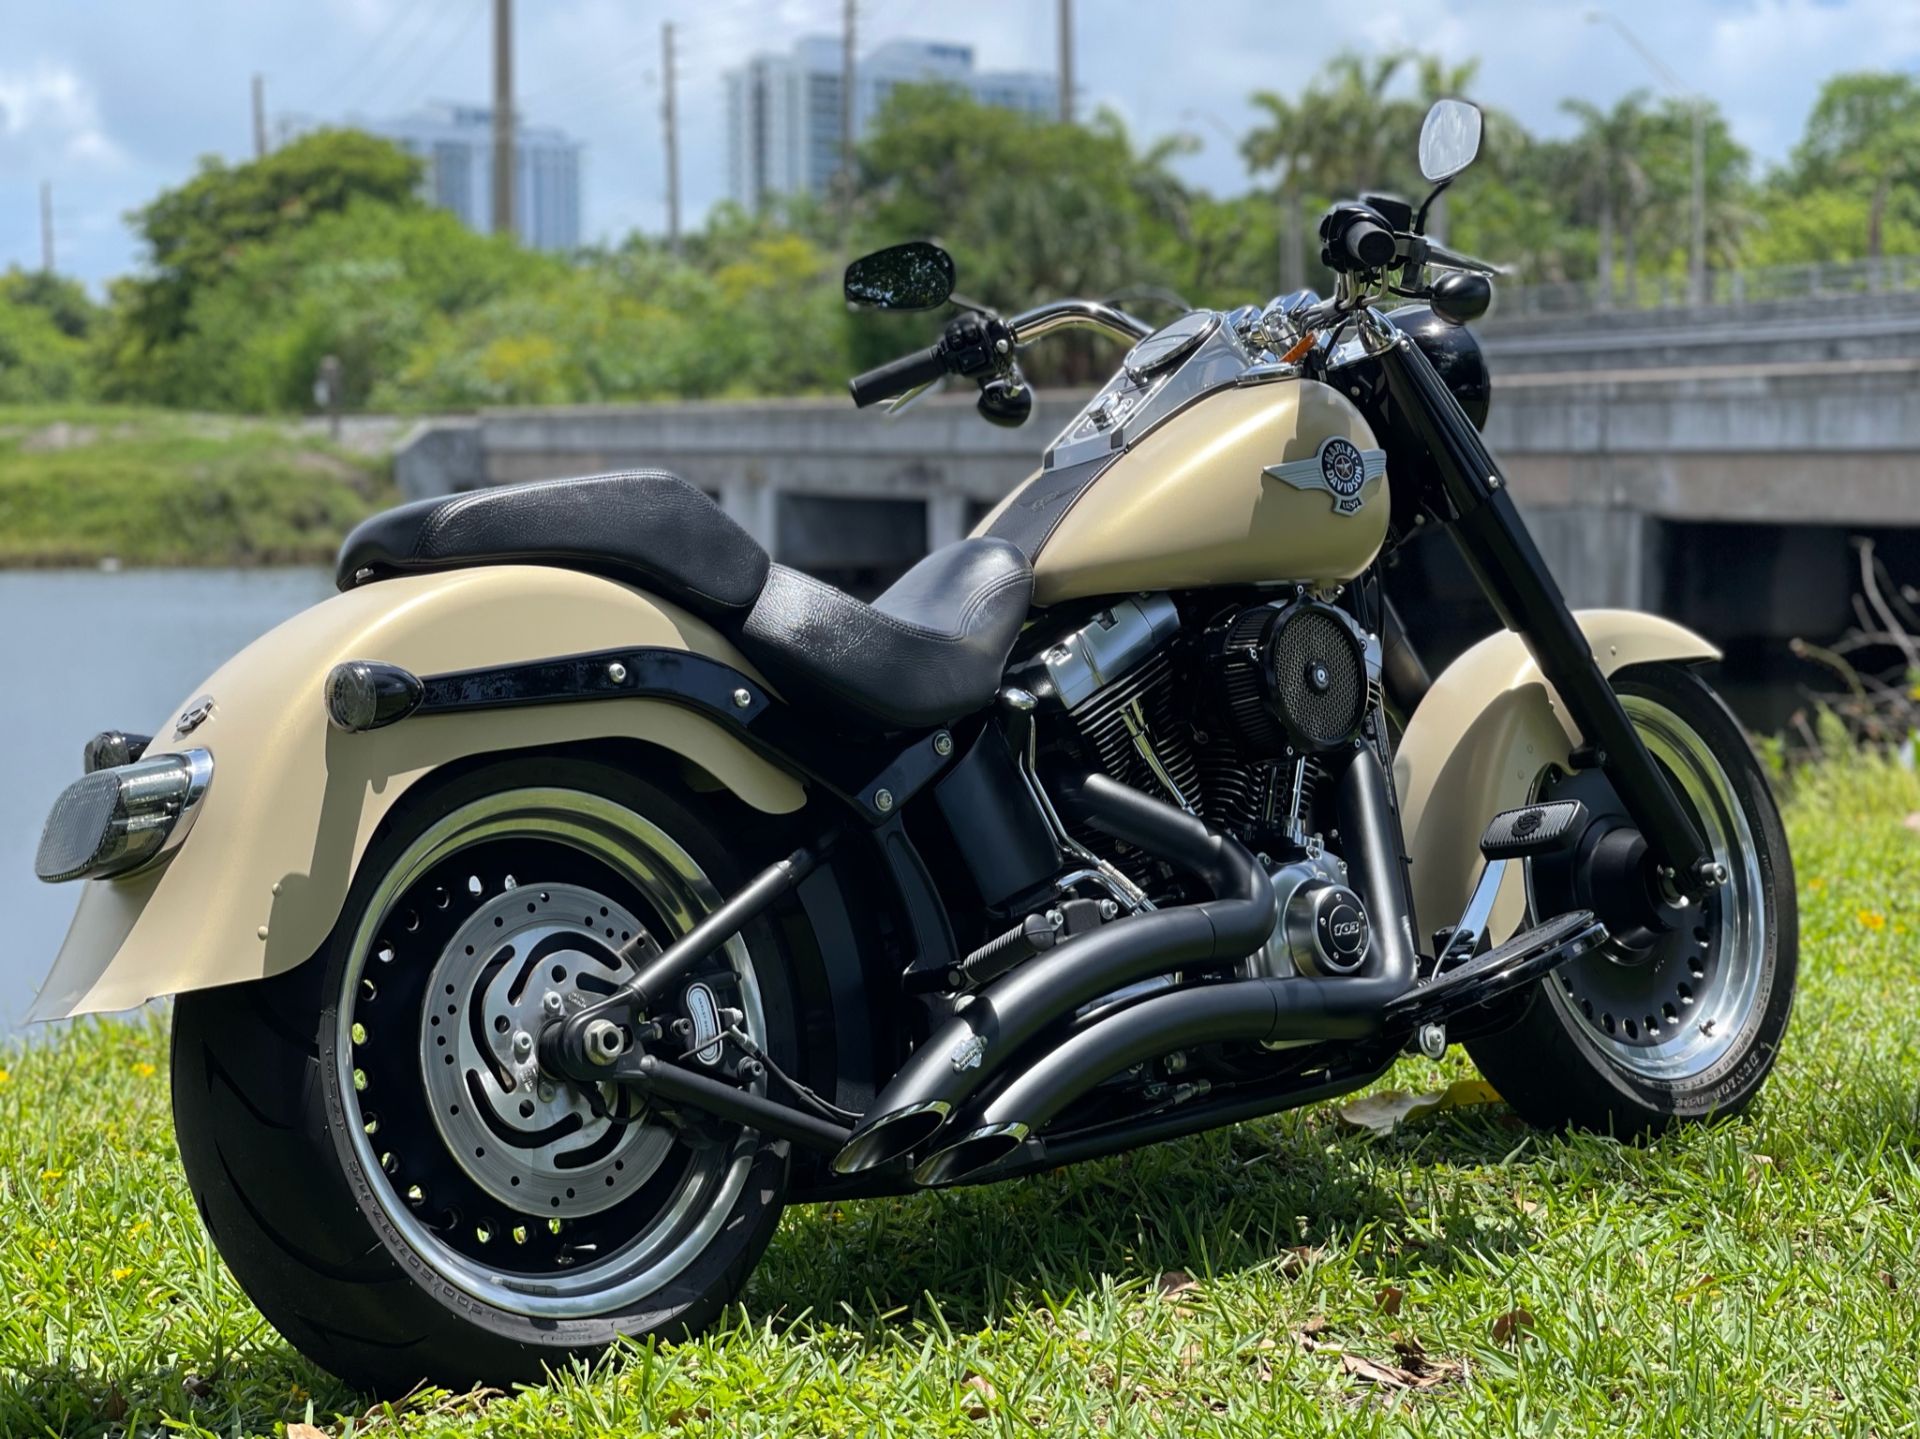 2015 Harley-Davidson Fat Boy® Lo in North Miami Beach, Florida - Photo 3